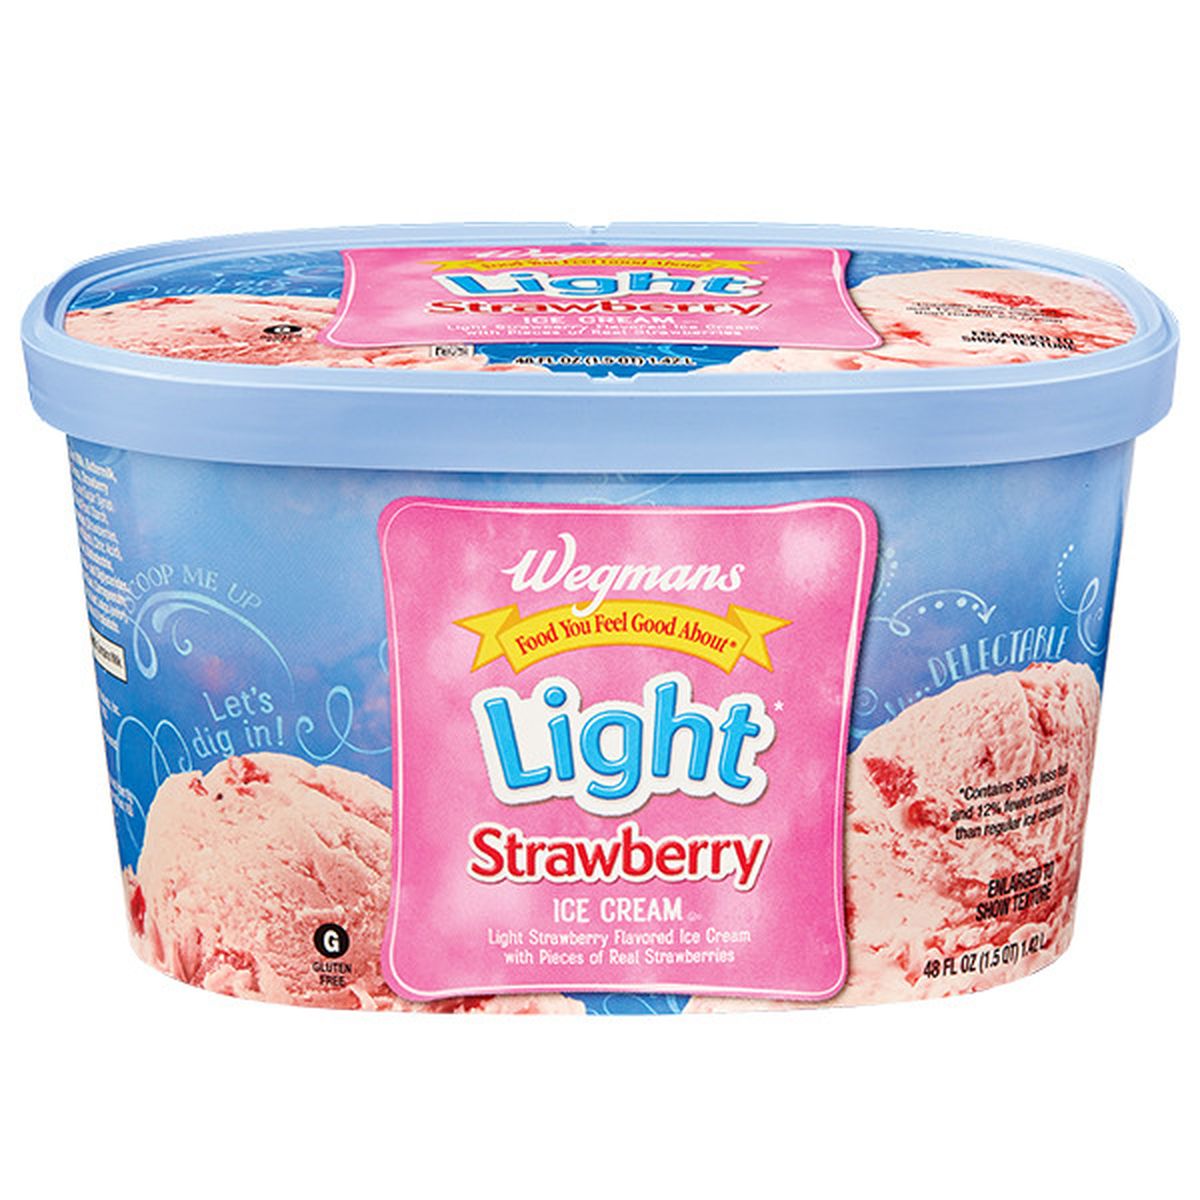 Calories in Wegmans Light* Strawberry Ice Cream